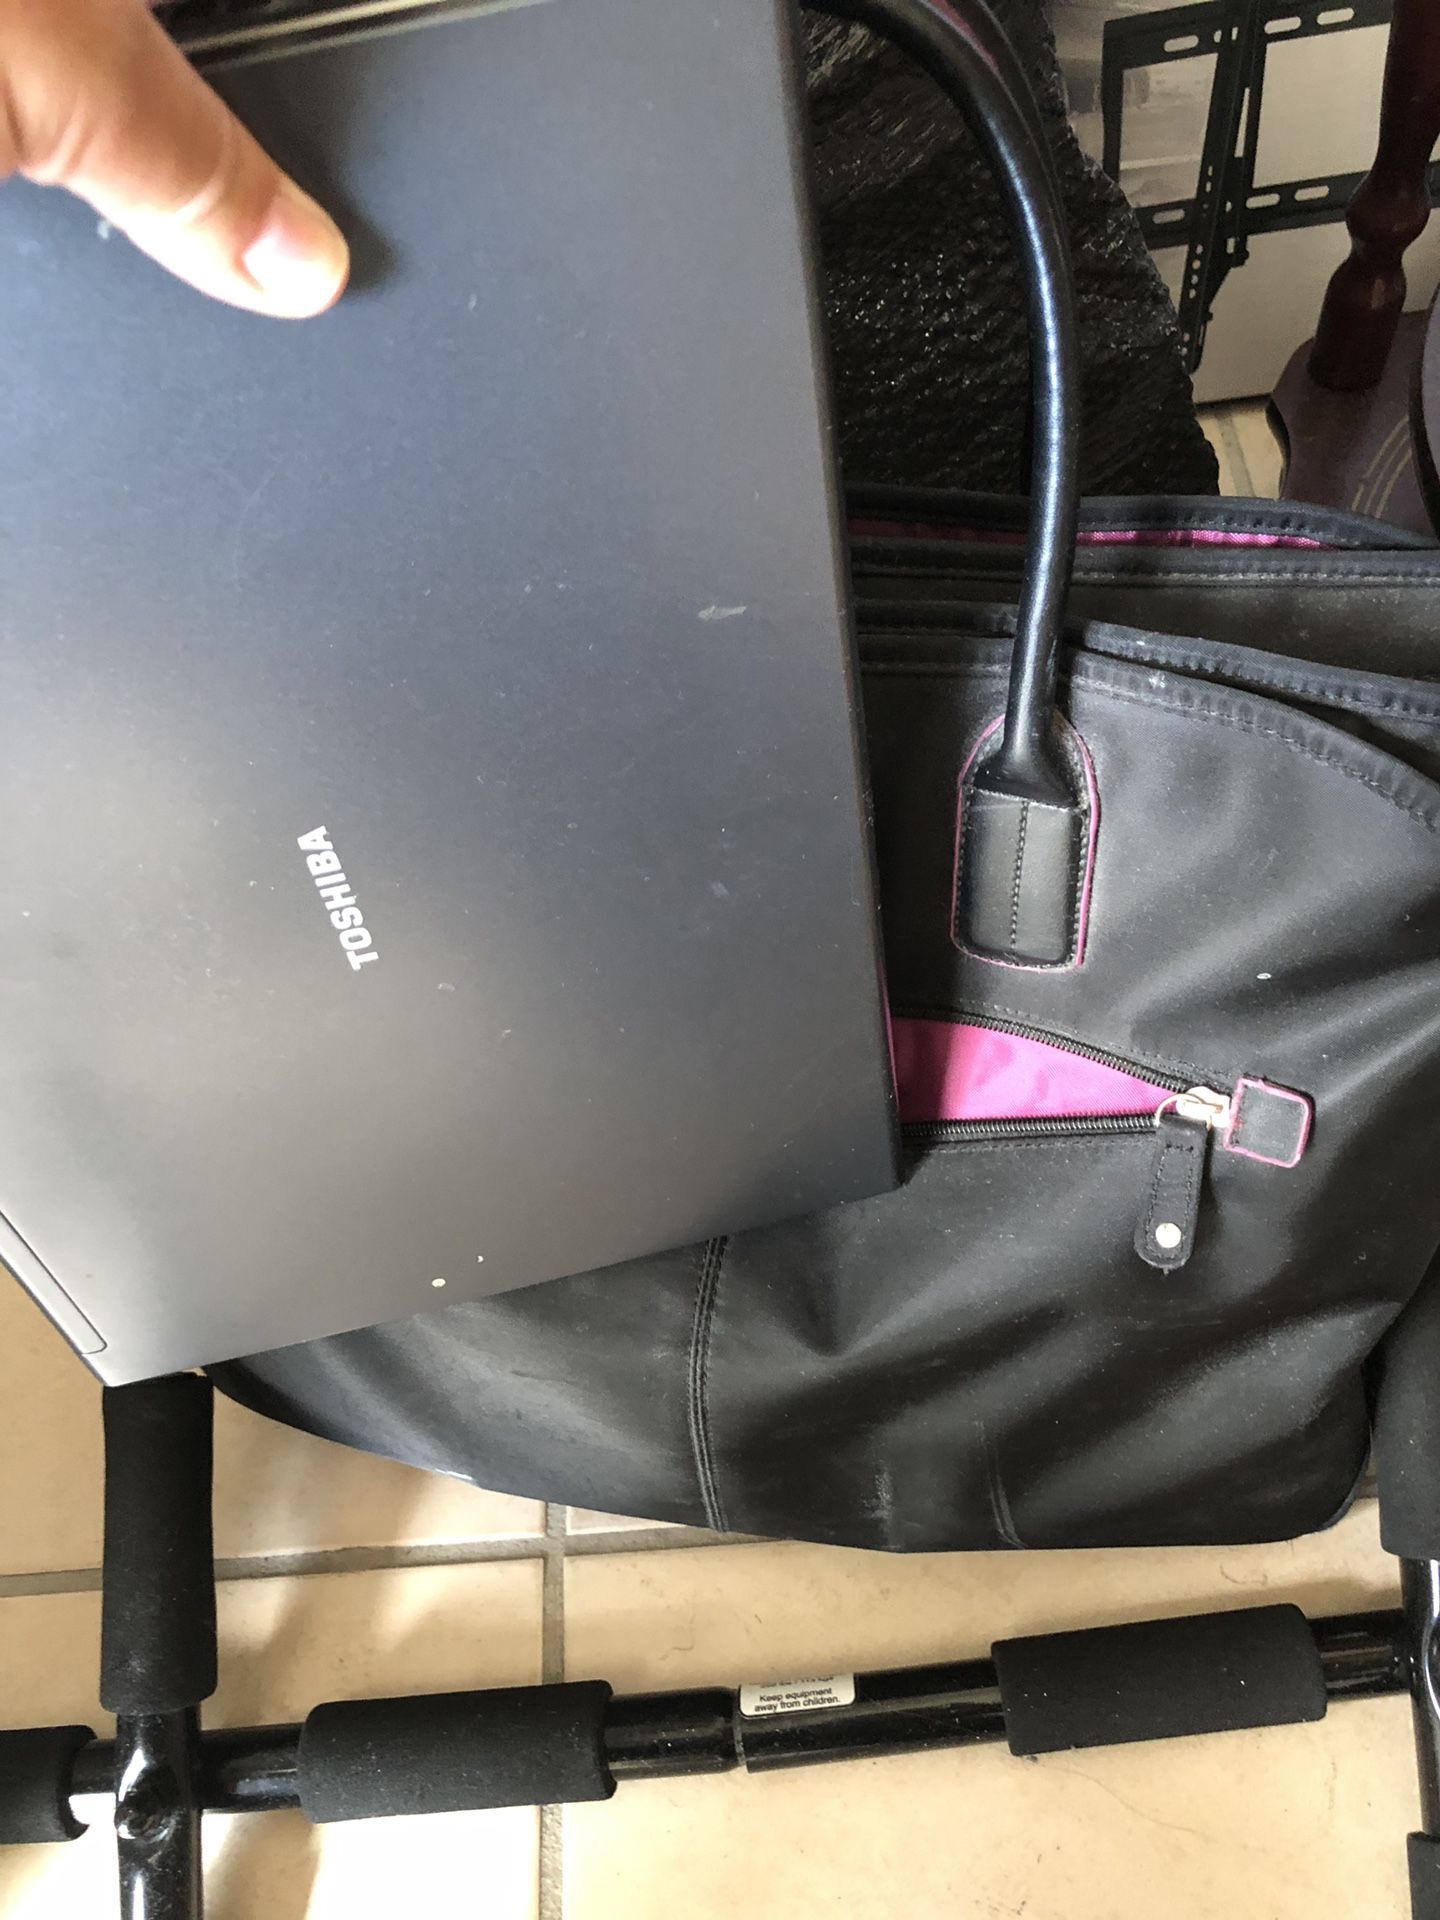 Toshiba laptop w bag